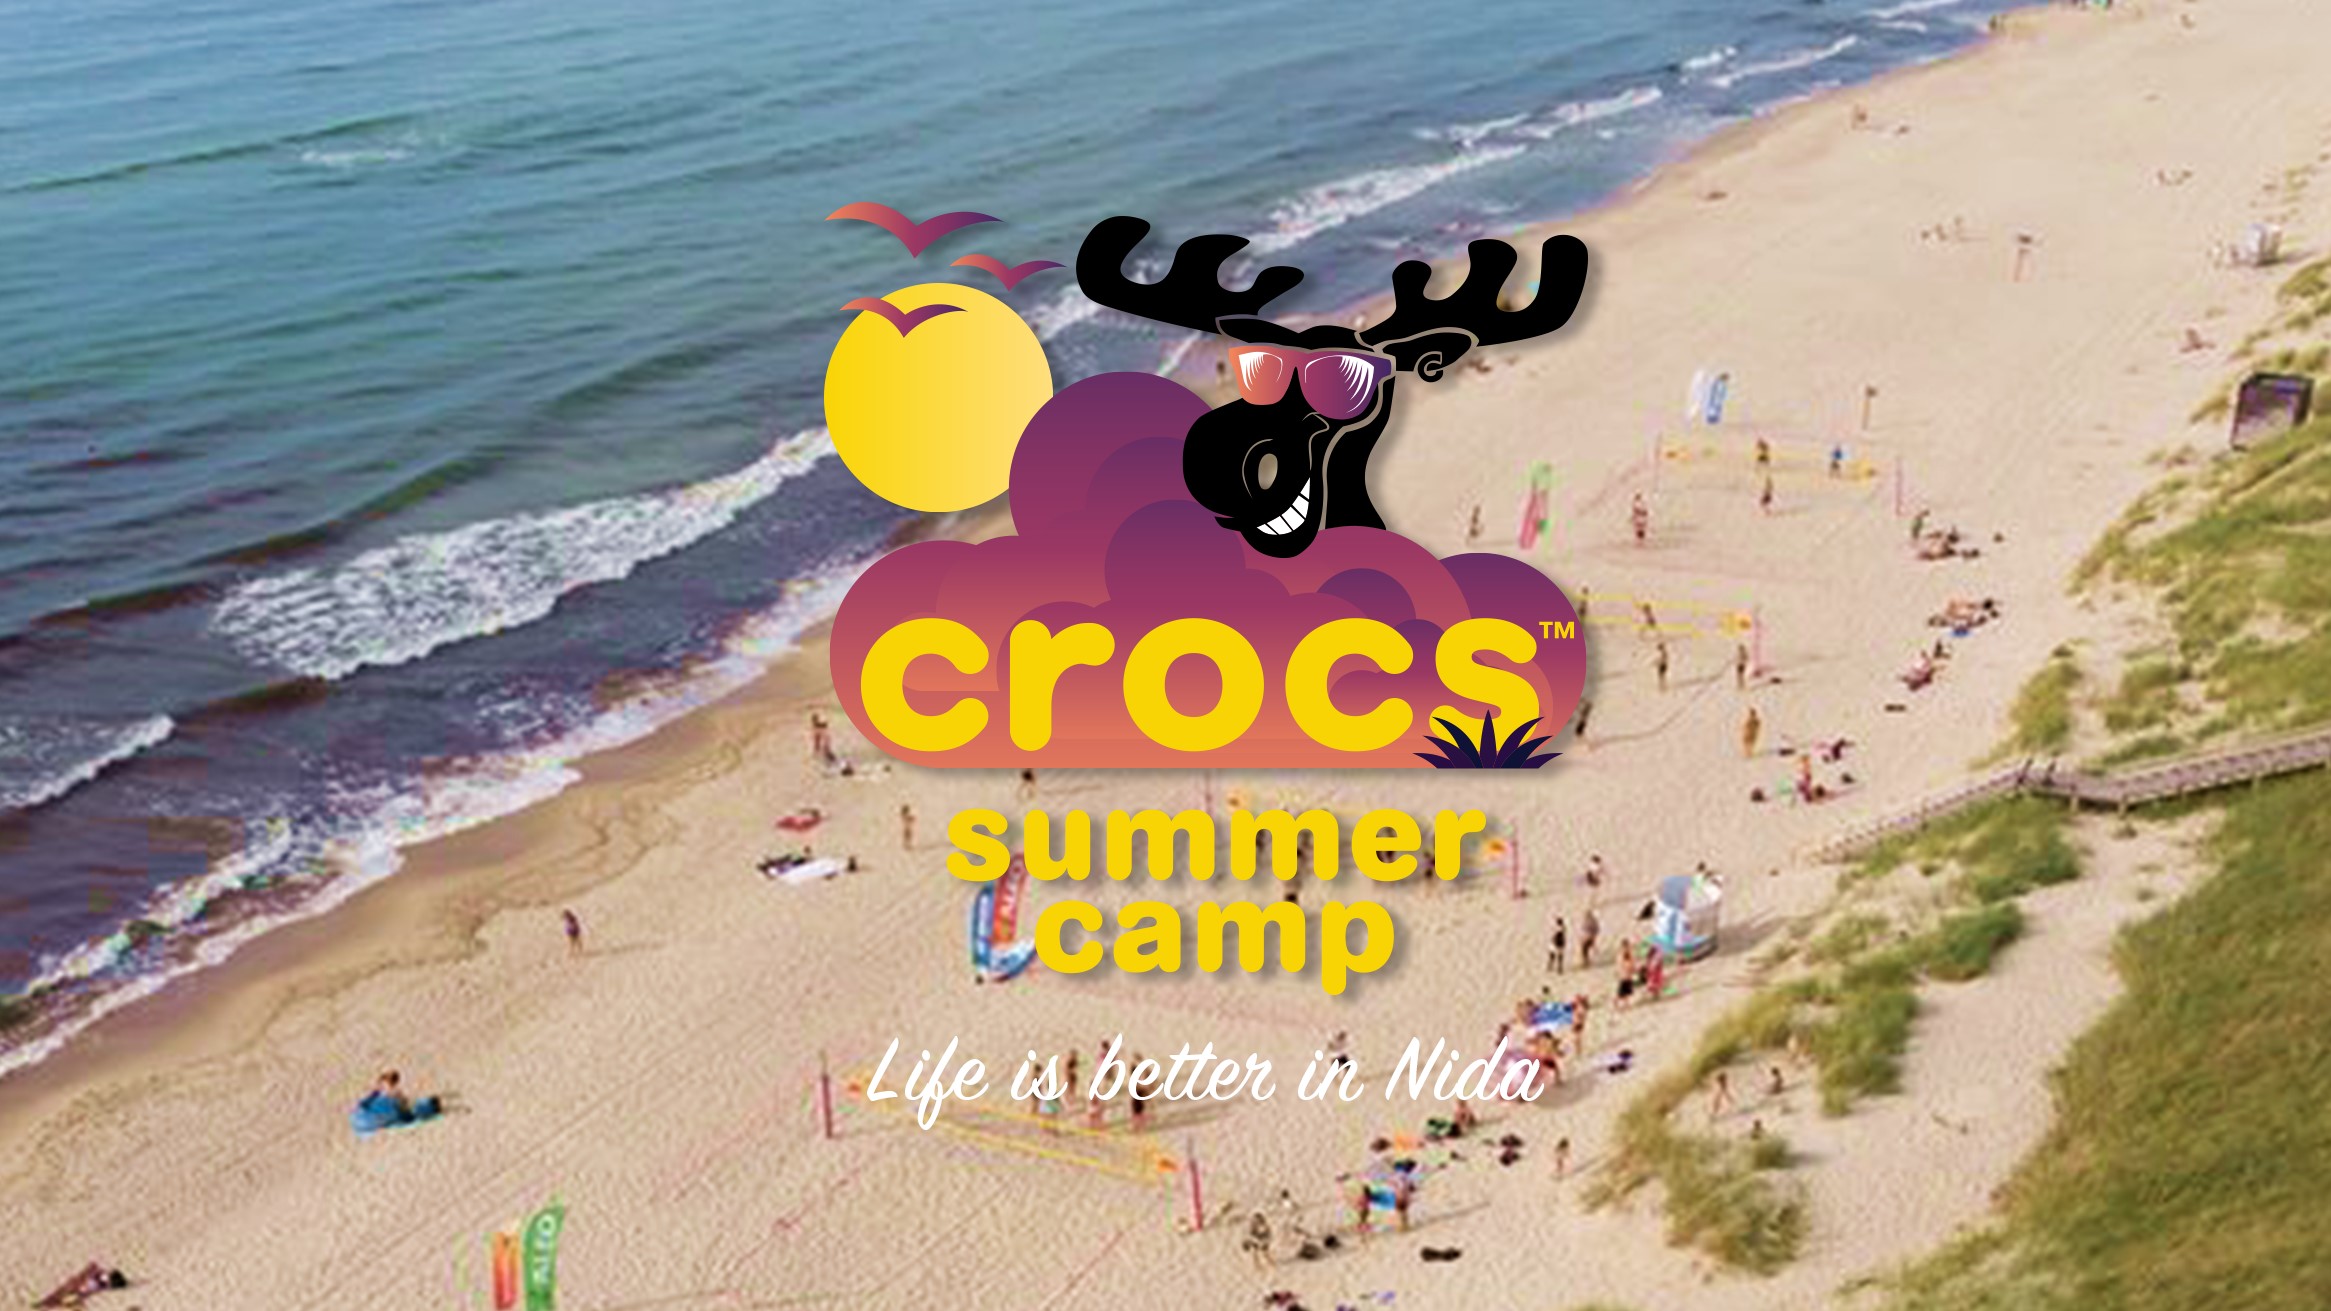 crocs_bbc_summer camp_FACEBOOK COVER_2020